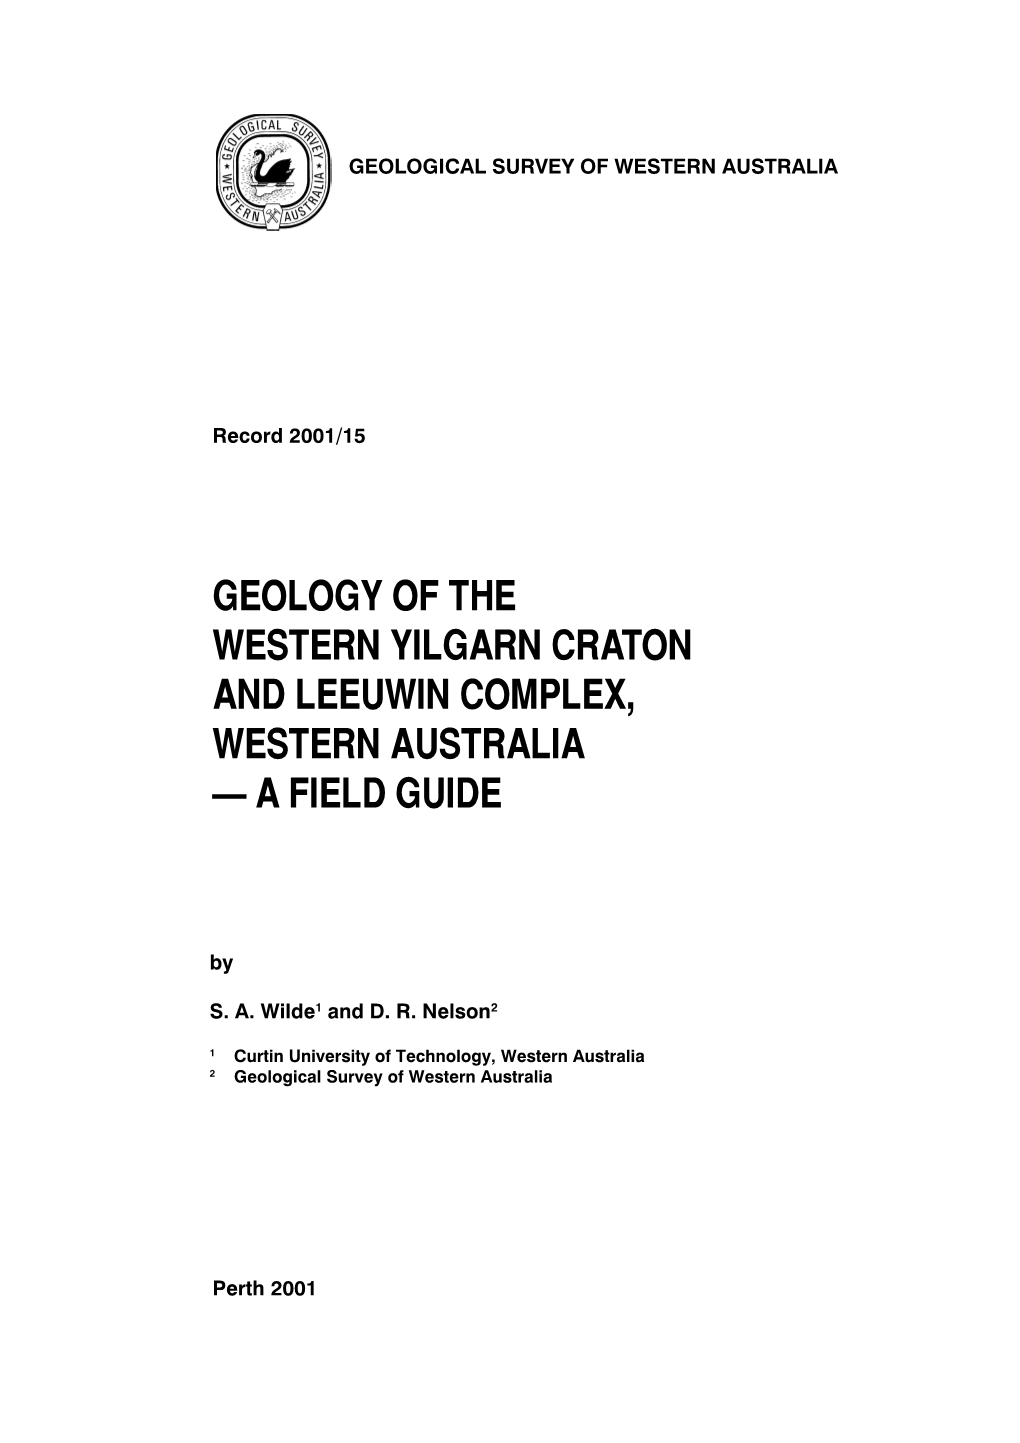 Geology of the Western Yilgarn Craton and Leeuwin Complex, Western Australia — a Field Guide